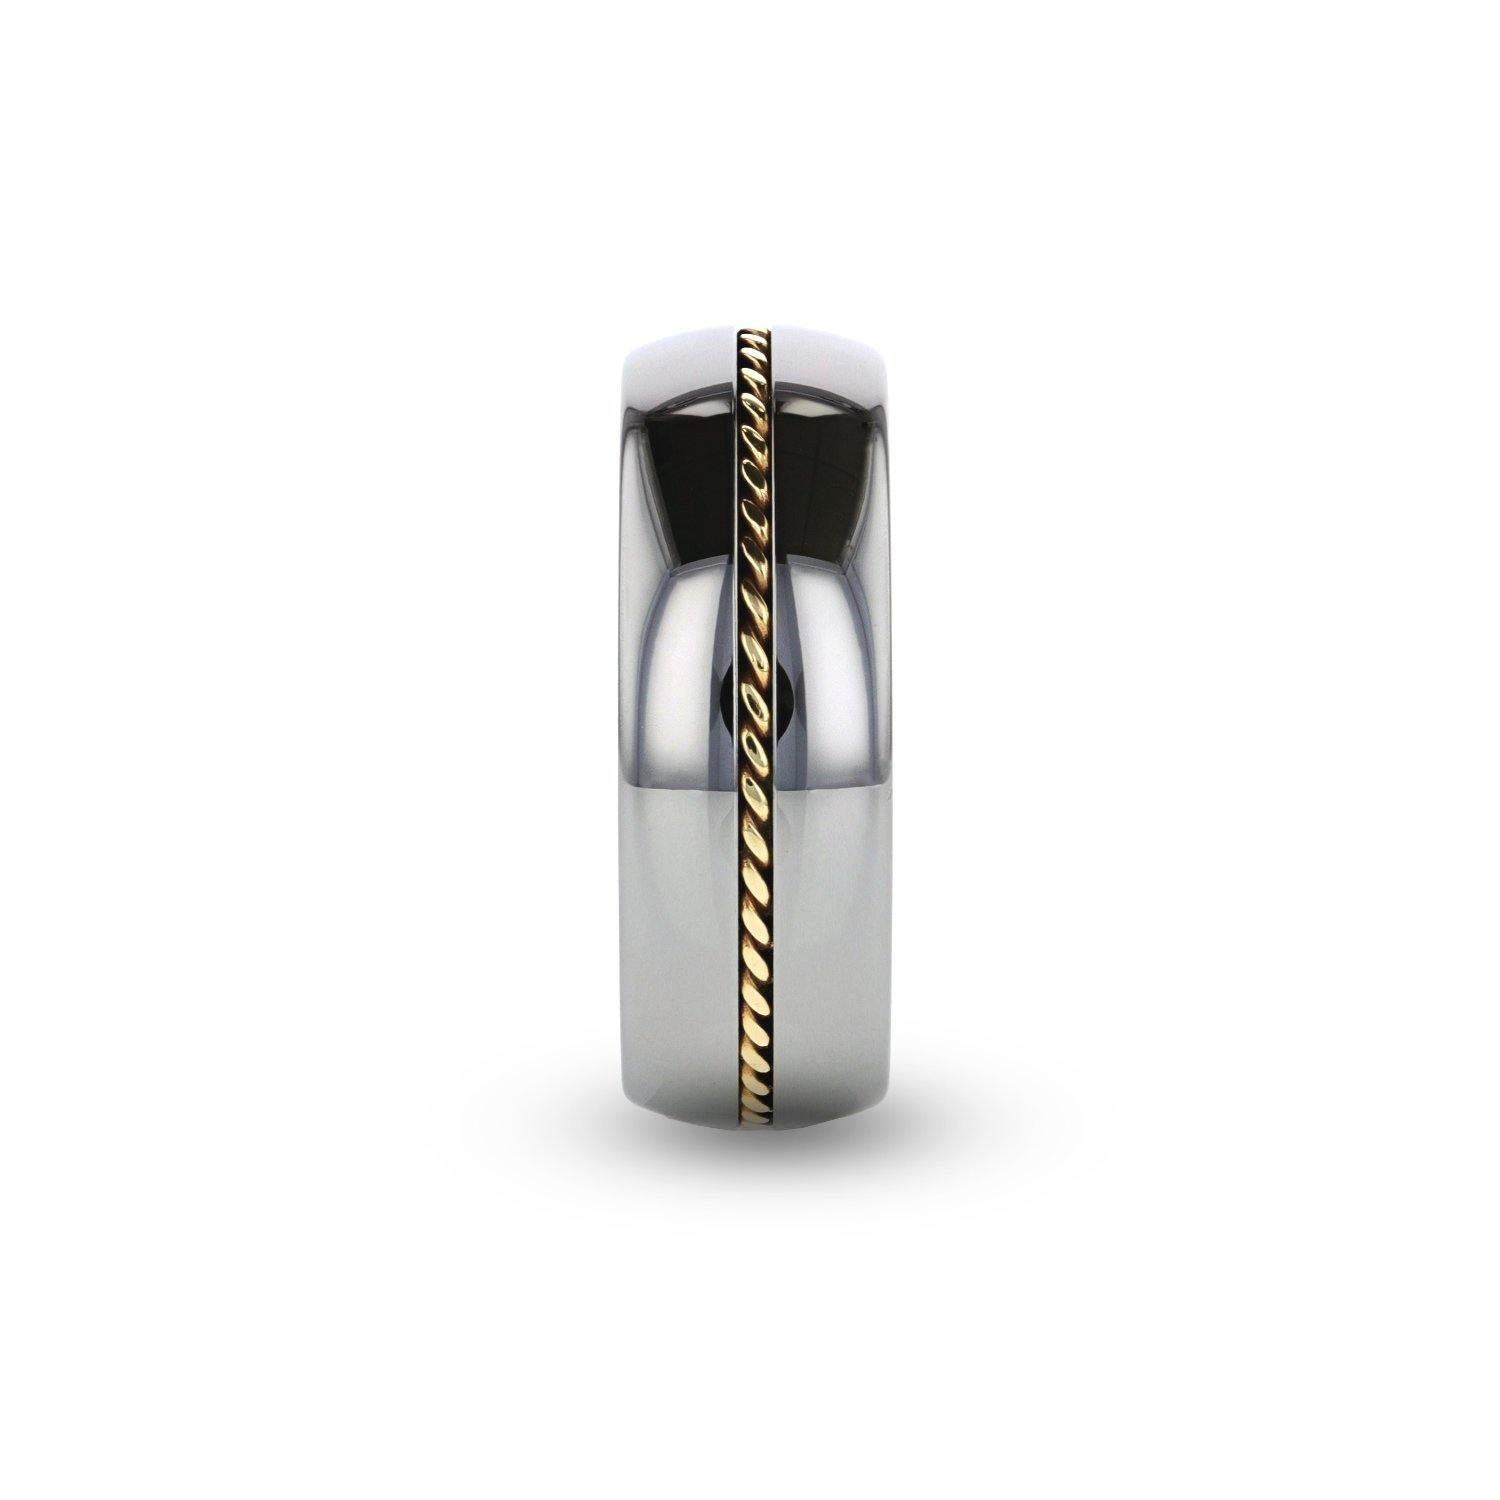 GOLDWYN - Braided 14k Gold Inlay Domed Tungsten Ring - 6mm or 8mm - The Rutile Ltd